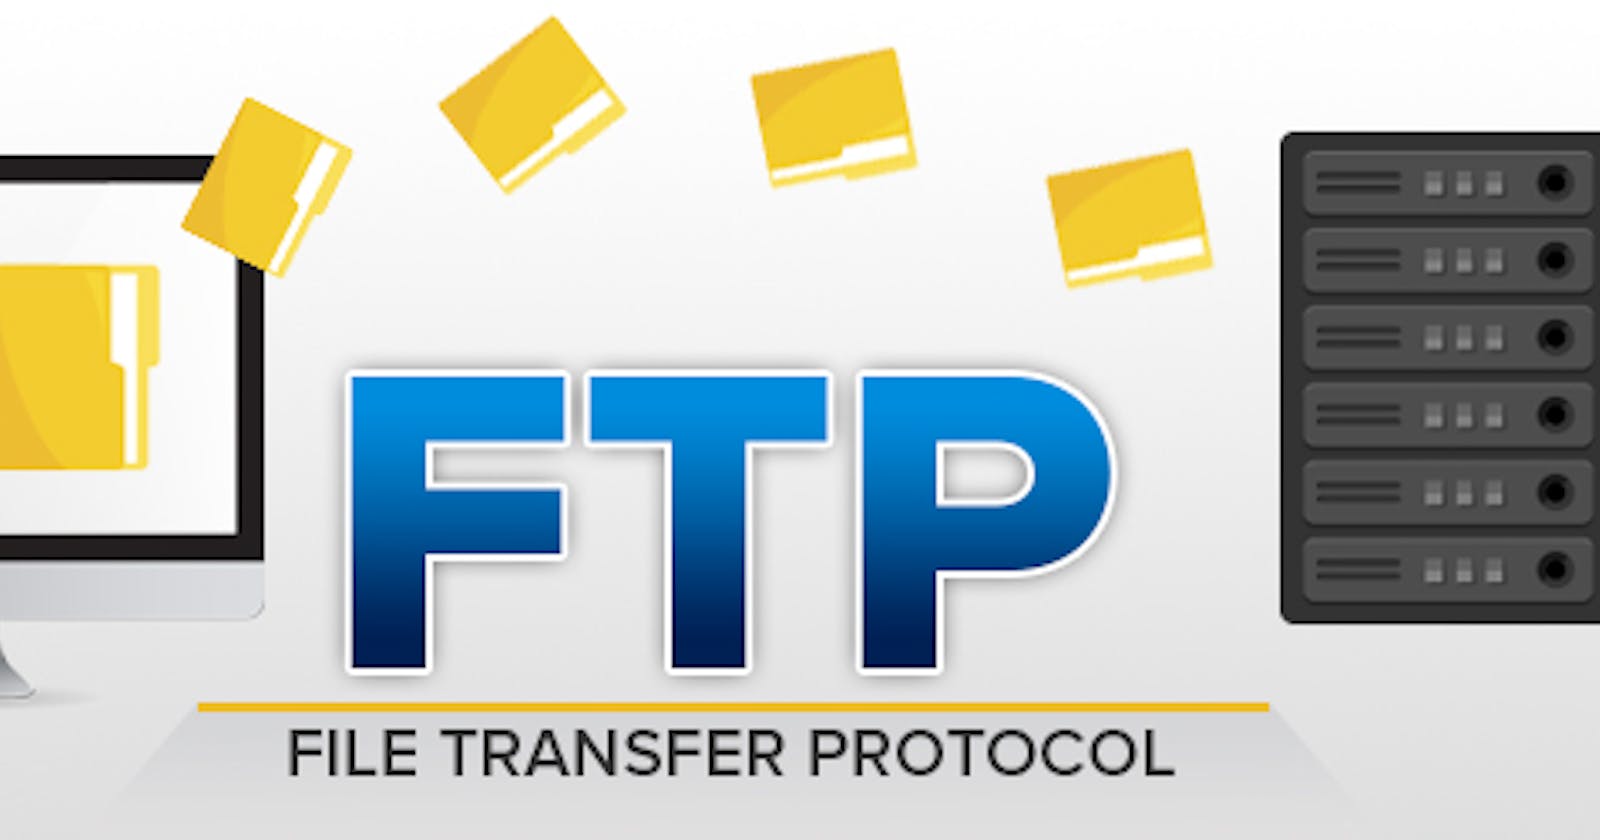 How to use FTP servers in Ubuntu